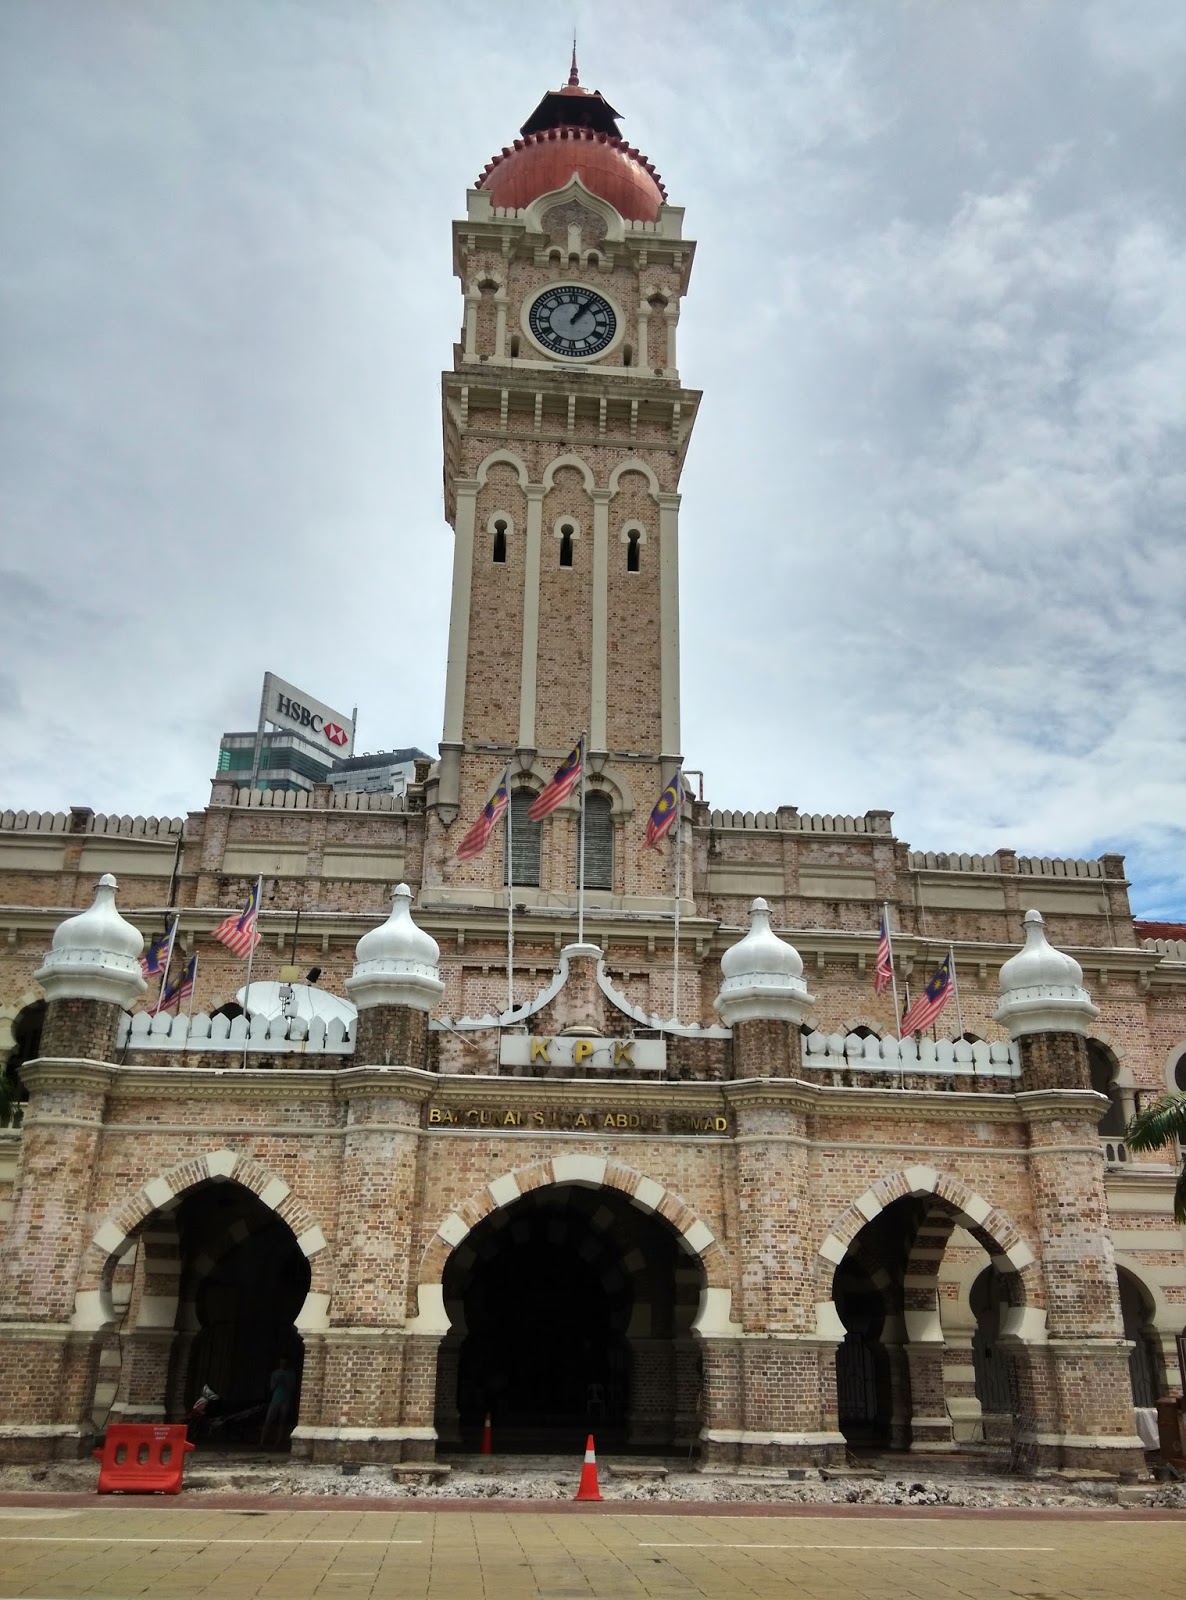 K M Cheng-Travel Journal: 7 Famous Architectural Landmarks in Kuala